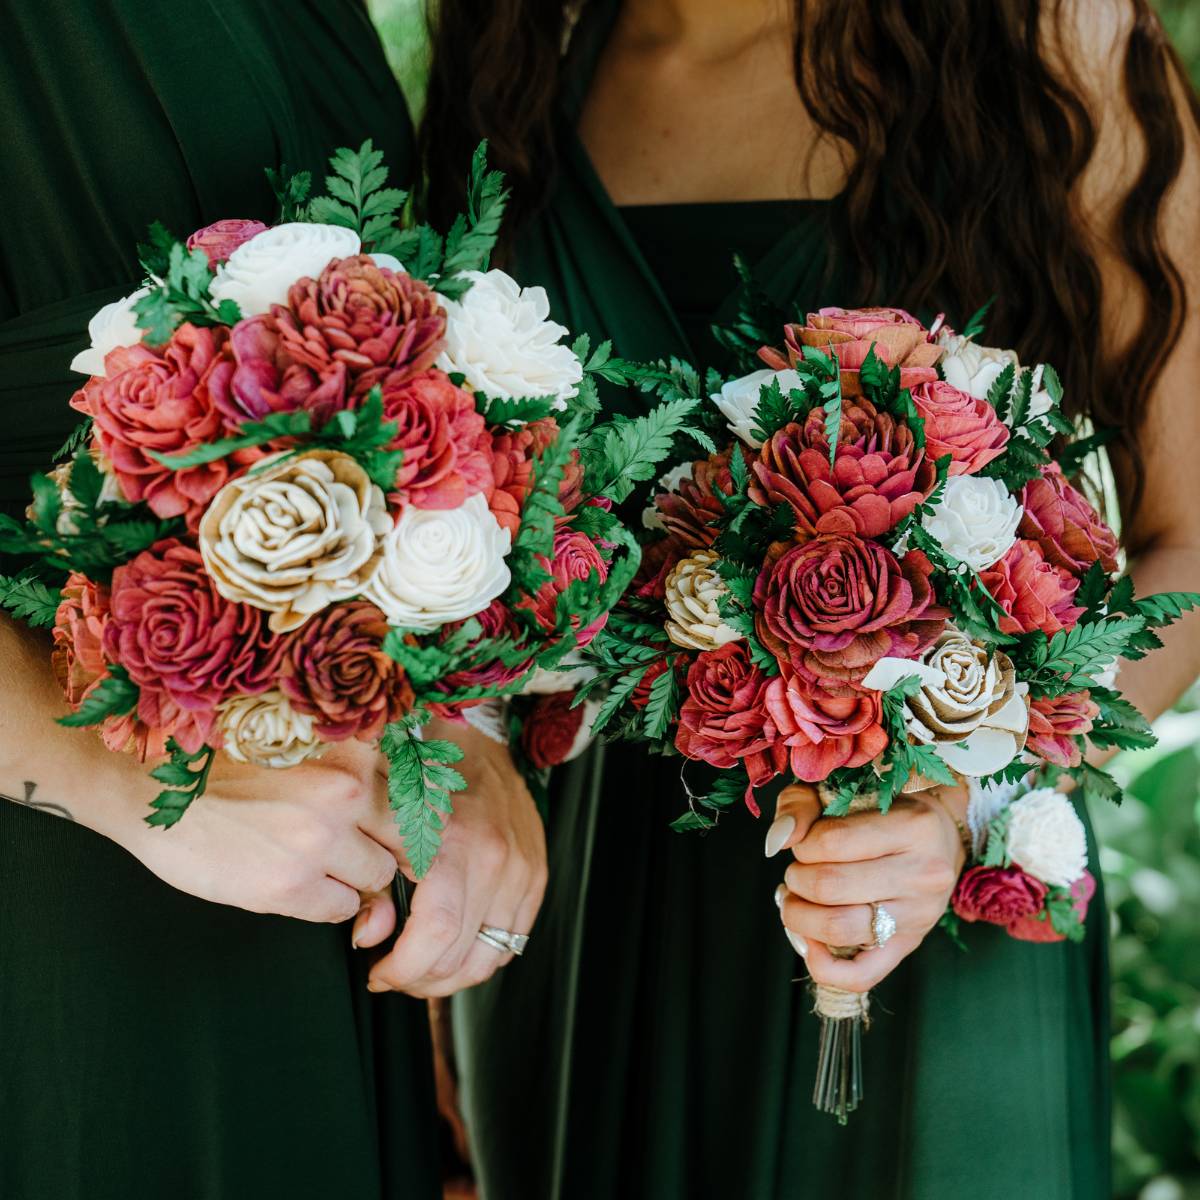 Enqiretly Exquisite Romantic Wedding Bridal Bouquet in Multiple